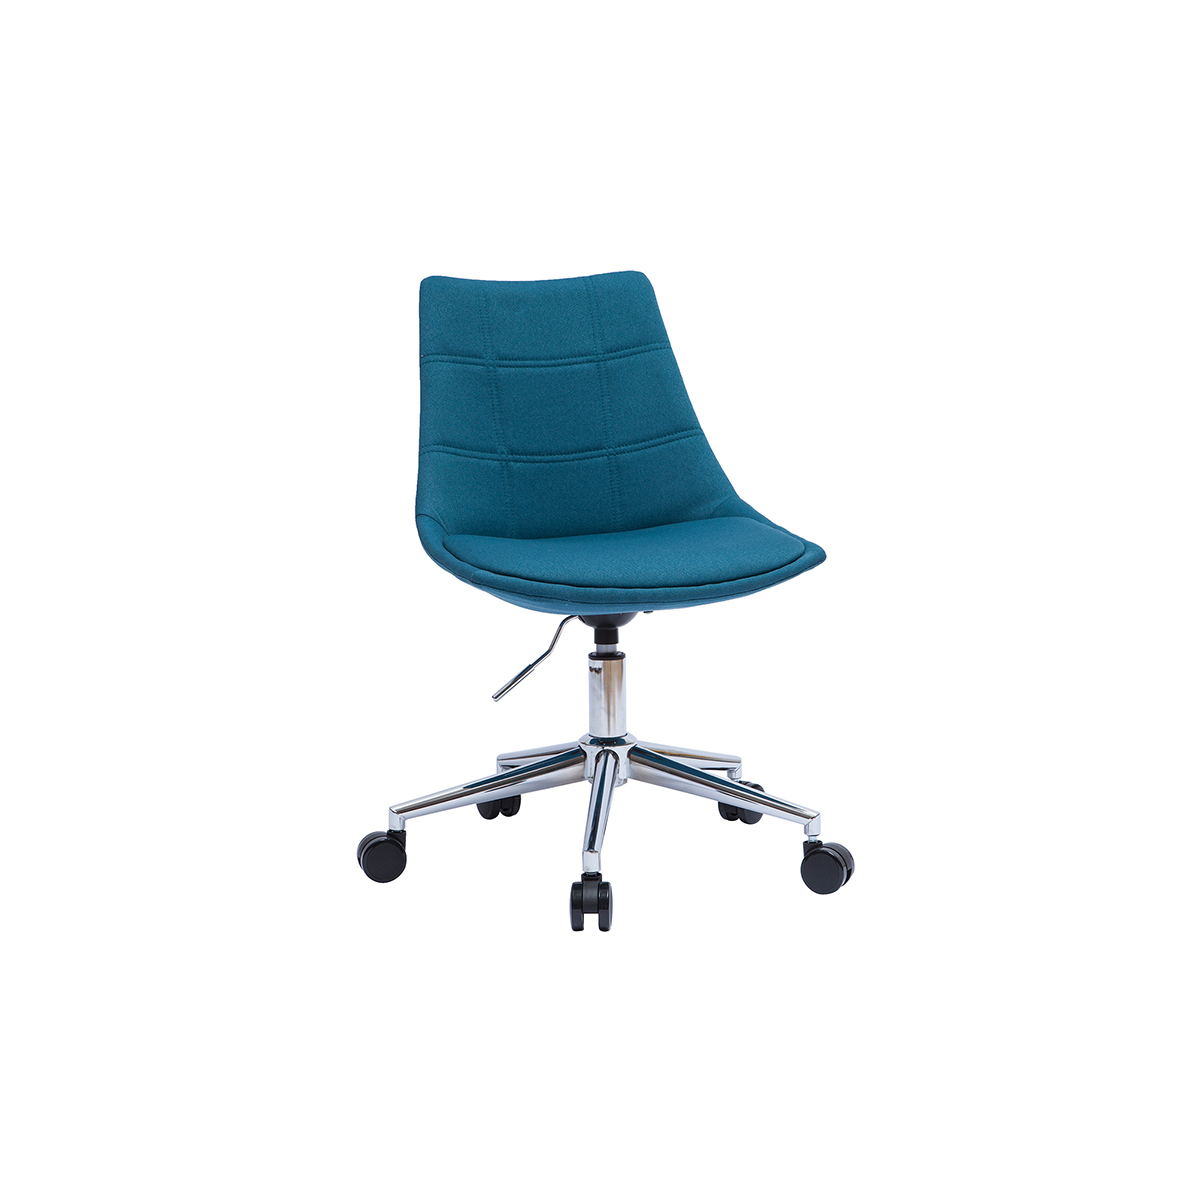 Chaise de bureau design tissu bleu canard MATILDE vue1